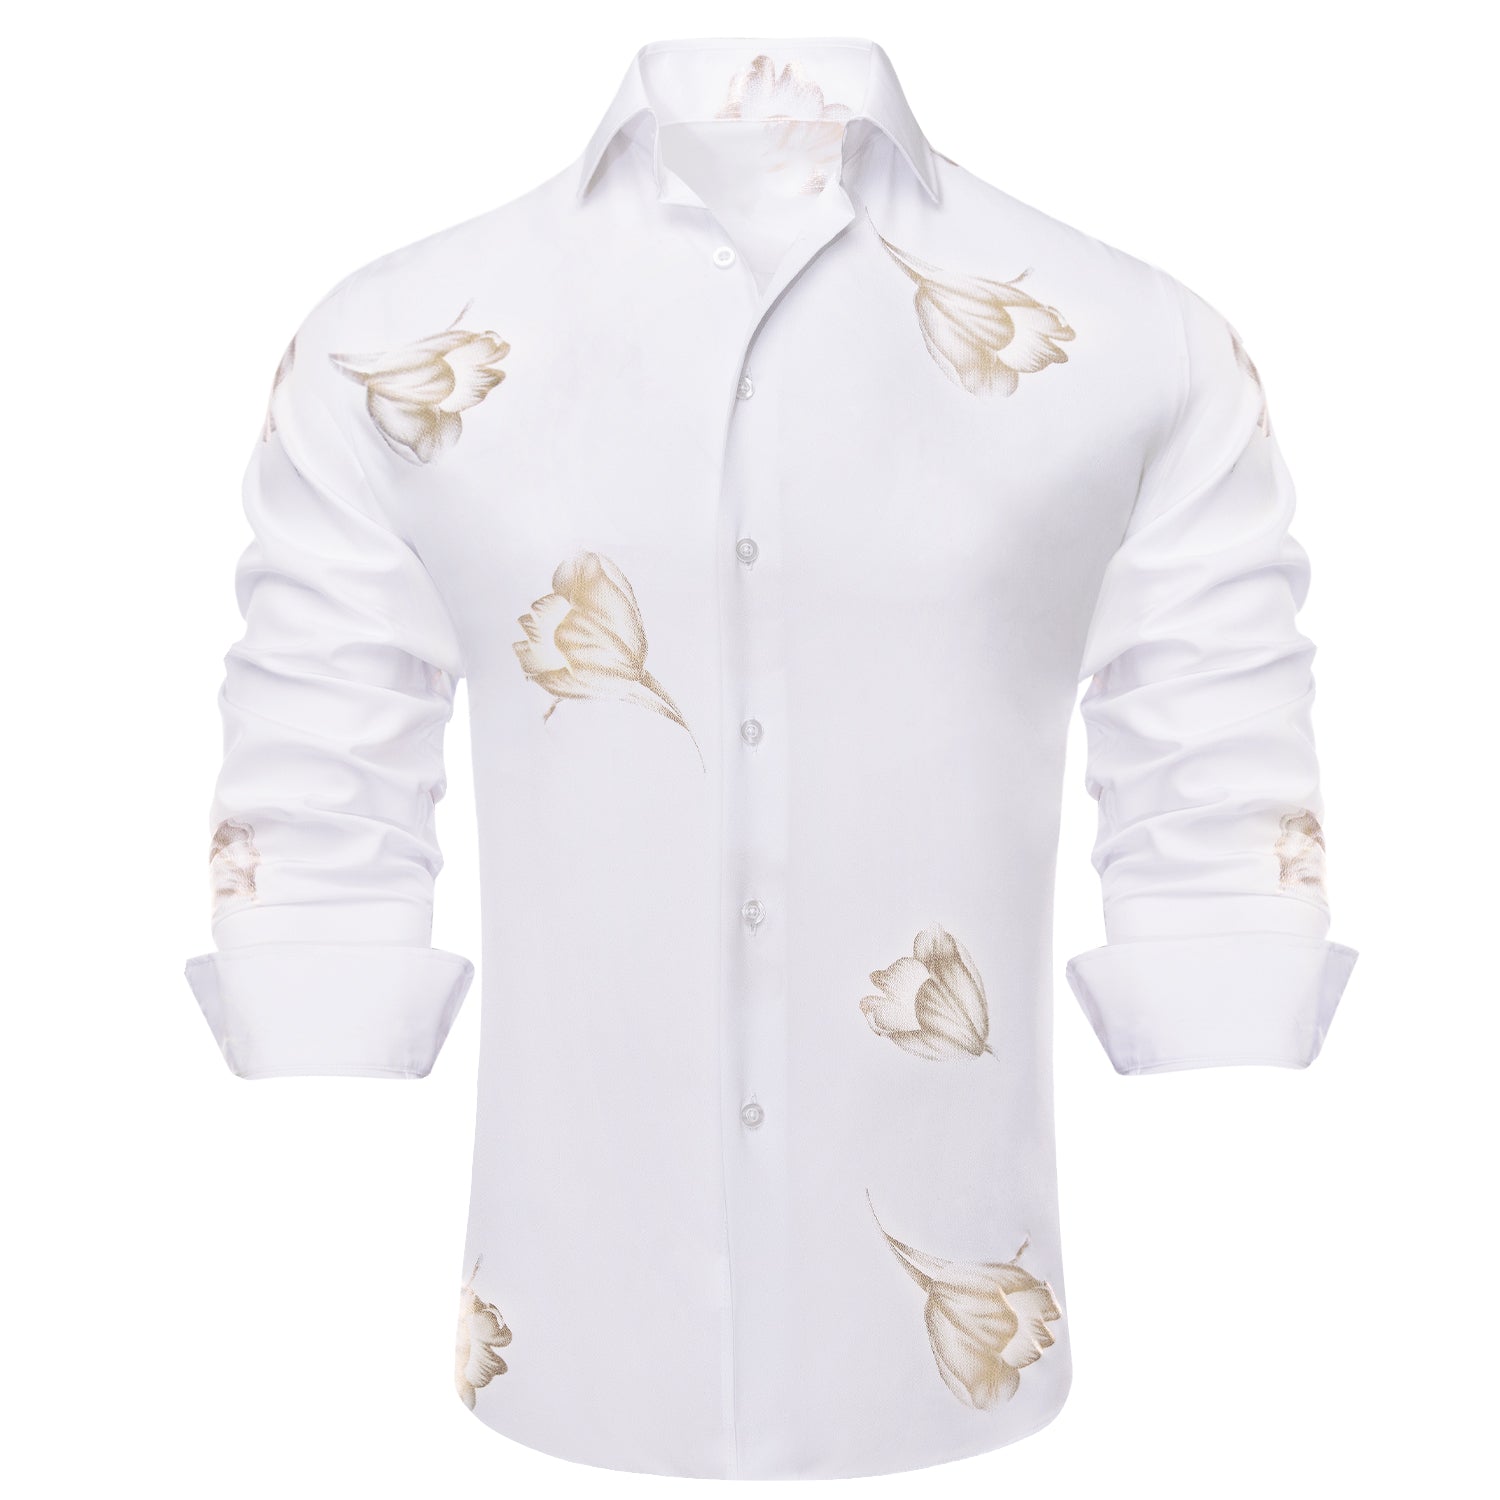 Gold Lily White Shirt men's dress shirt